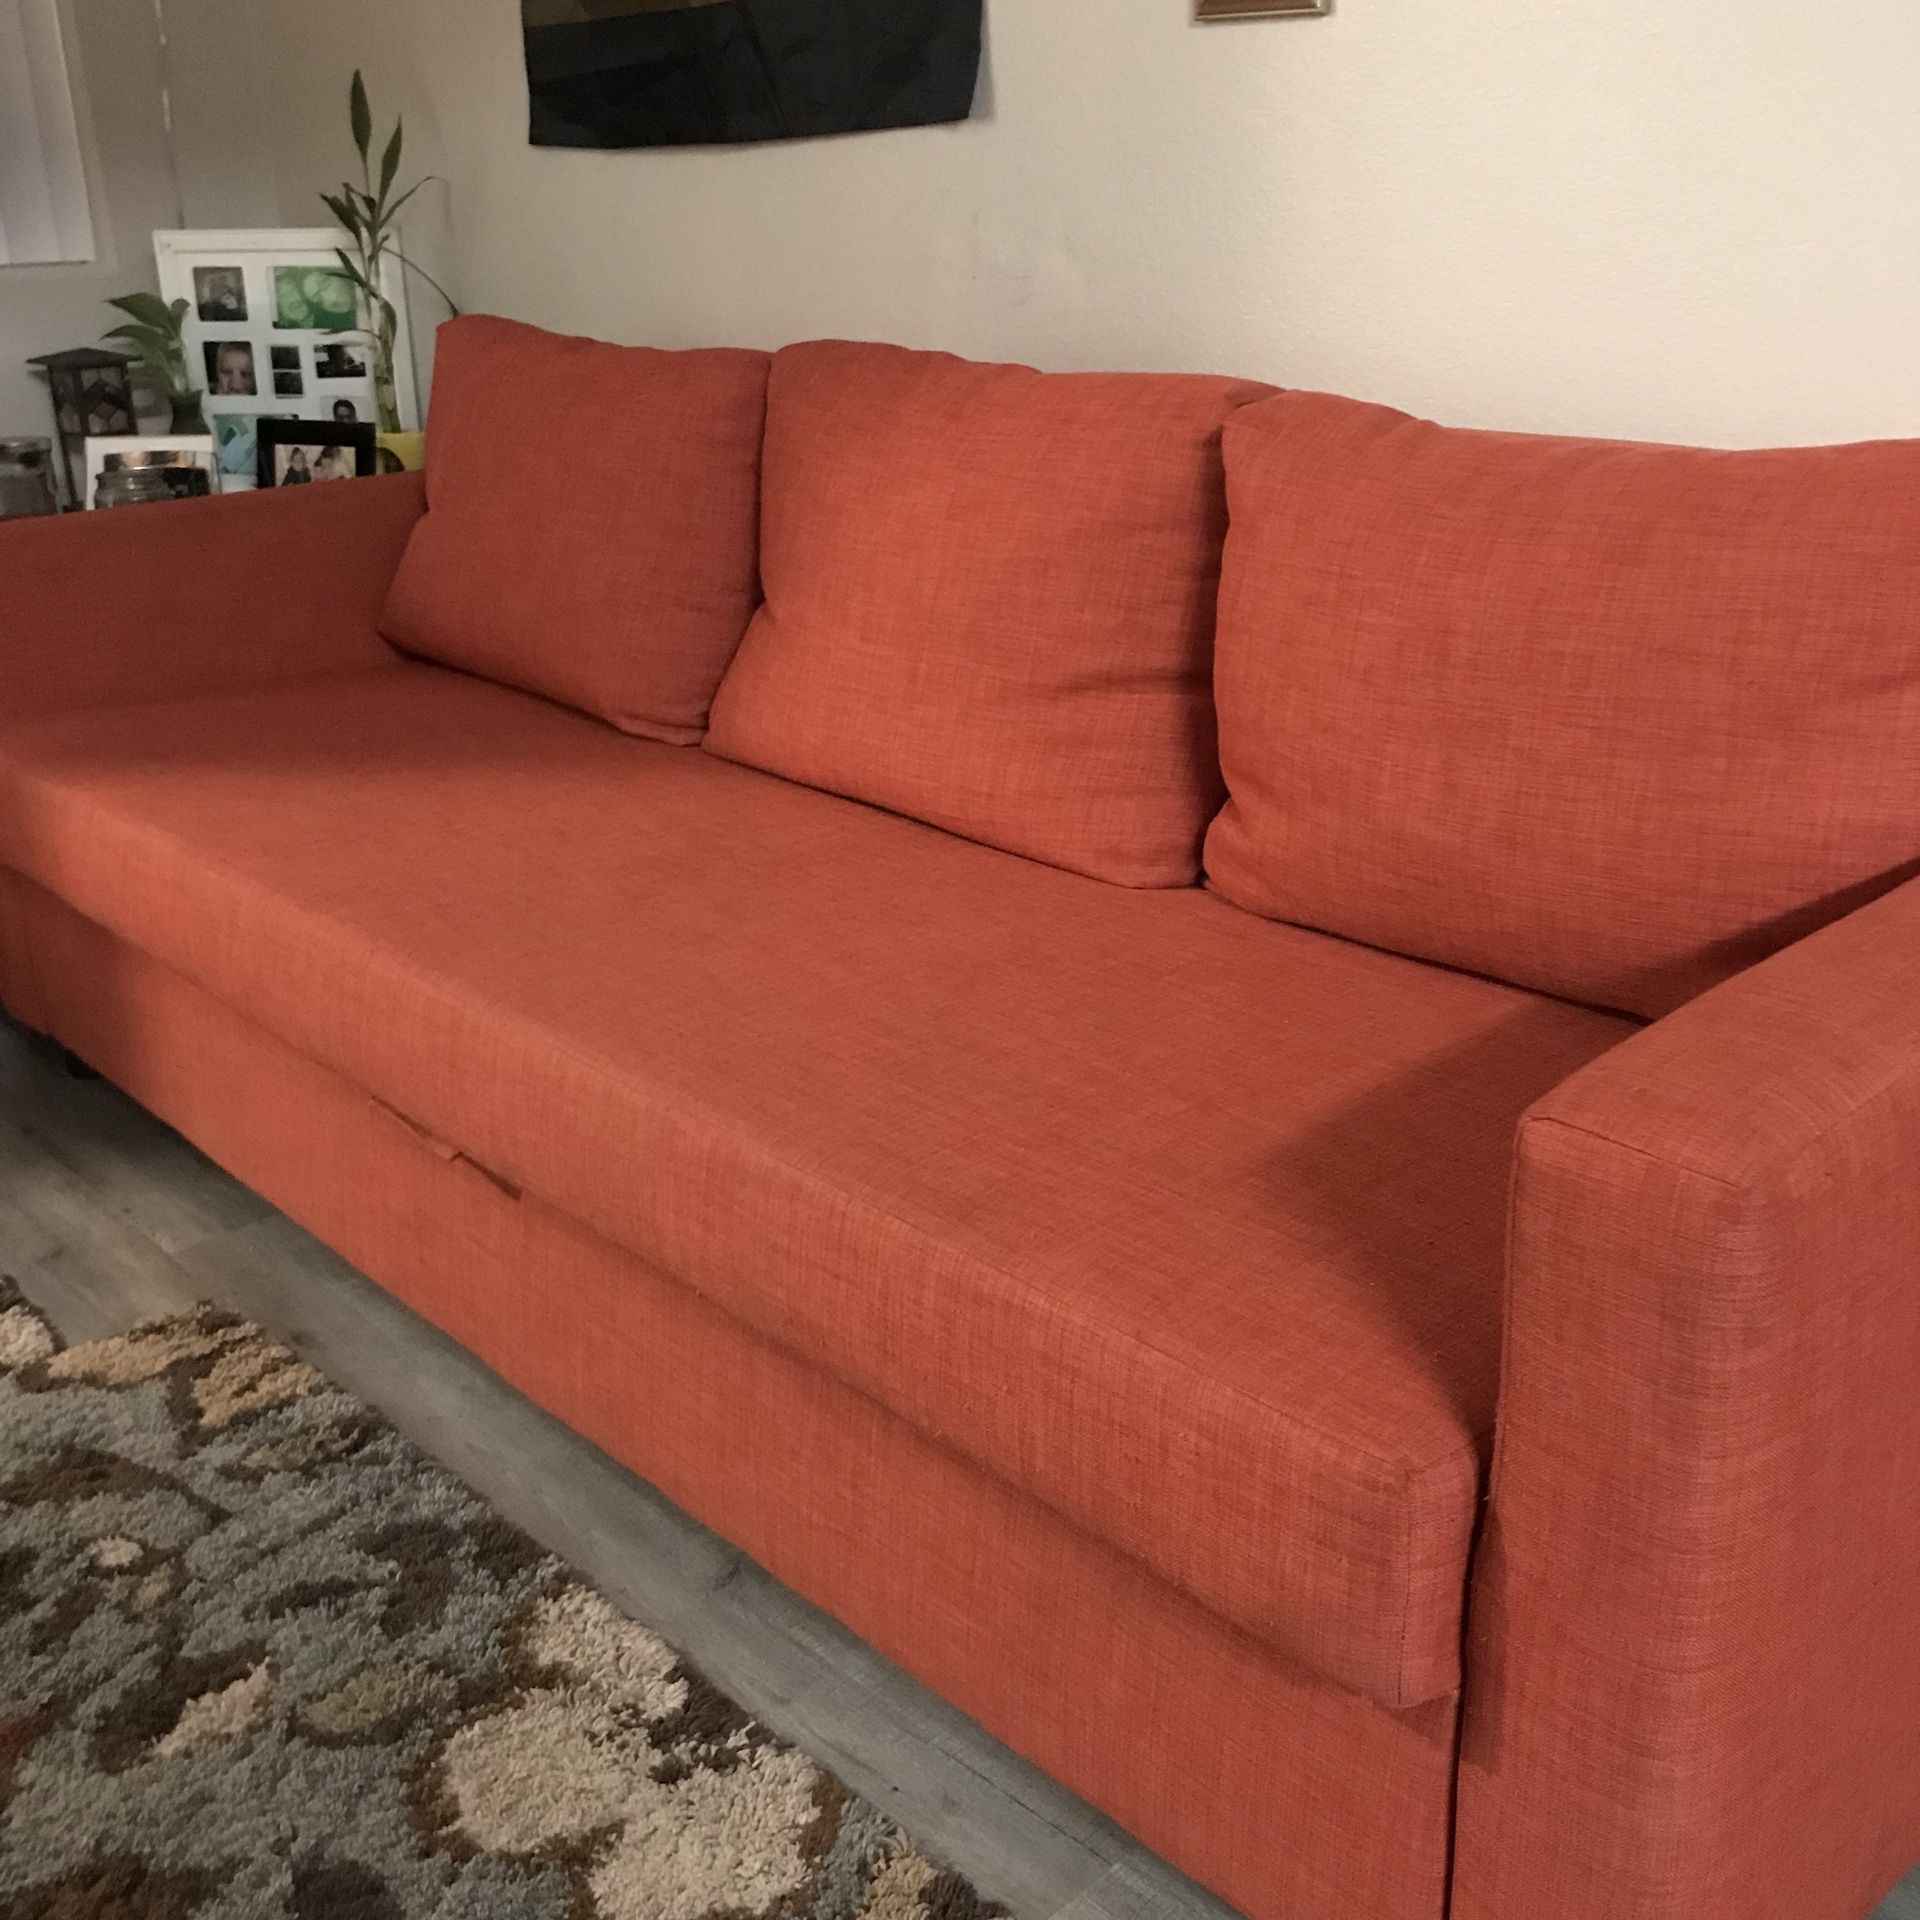 IKEA SOFA/QUEEN SIZE SLEEPER ORANGE Nice Couch!